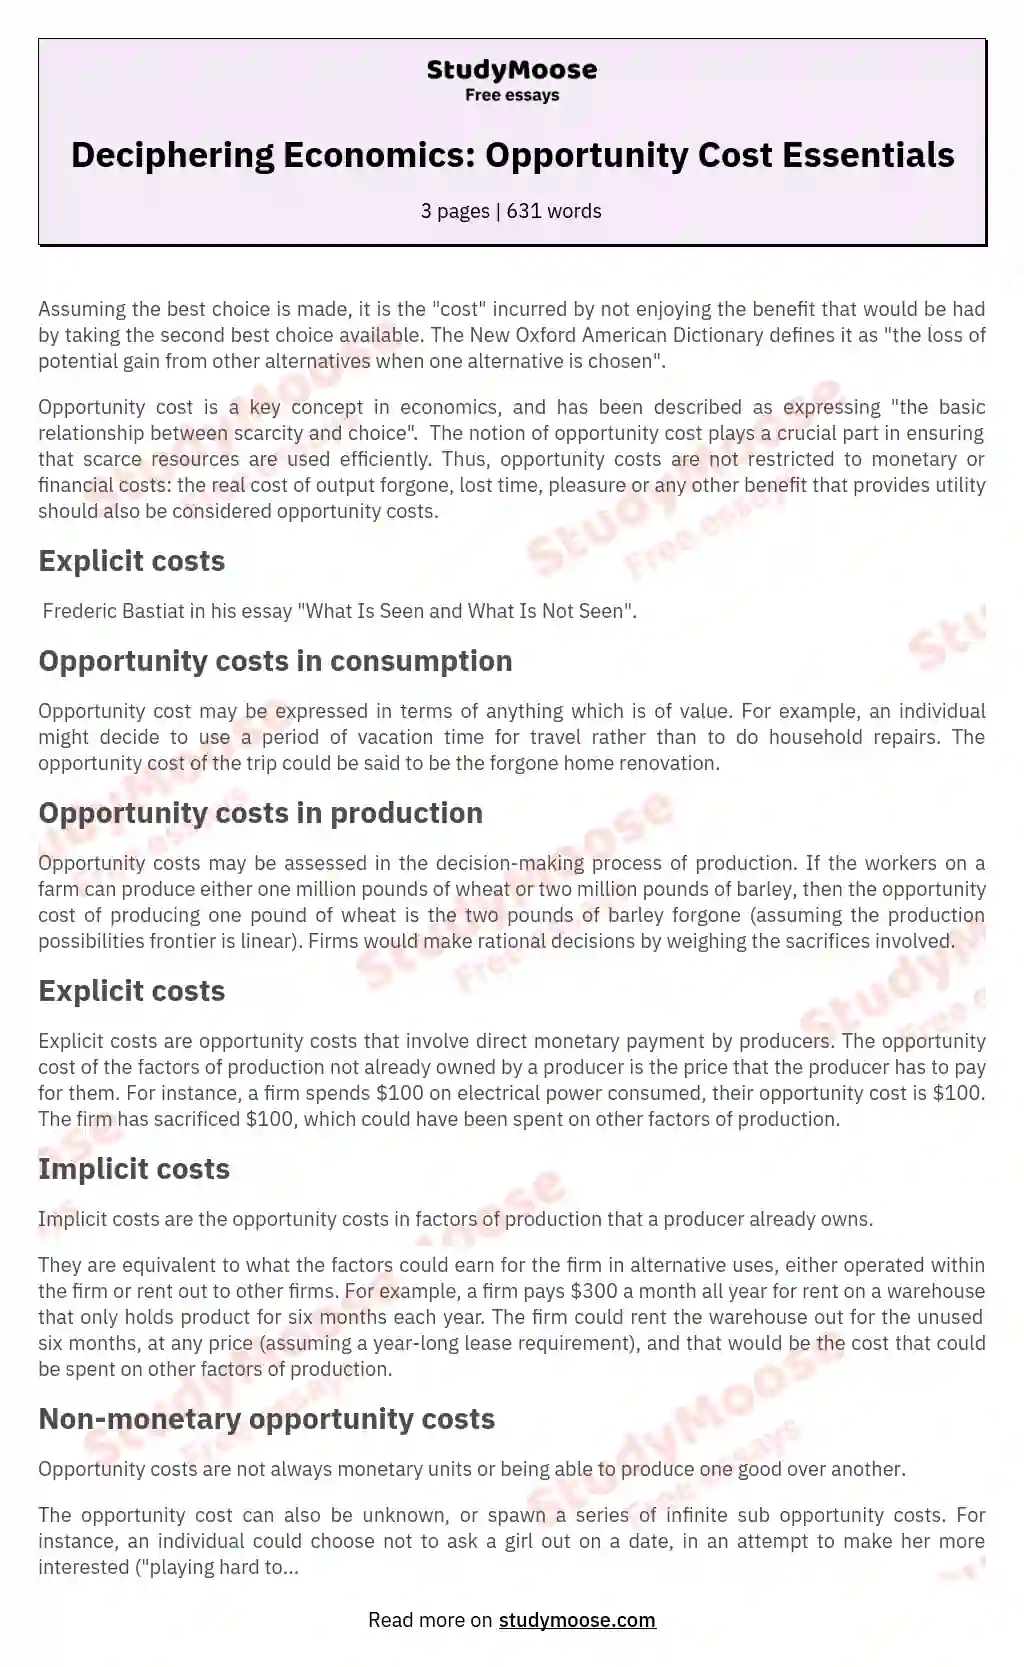 Deciphering Economics: Opportunity Cost Essentials essay